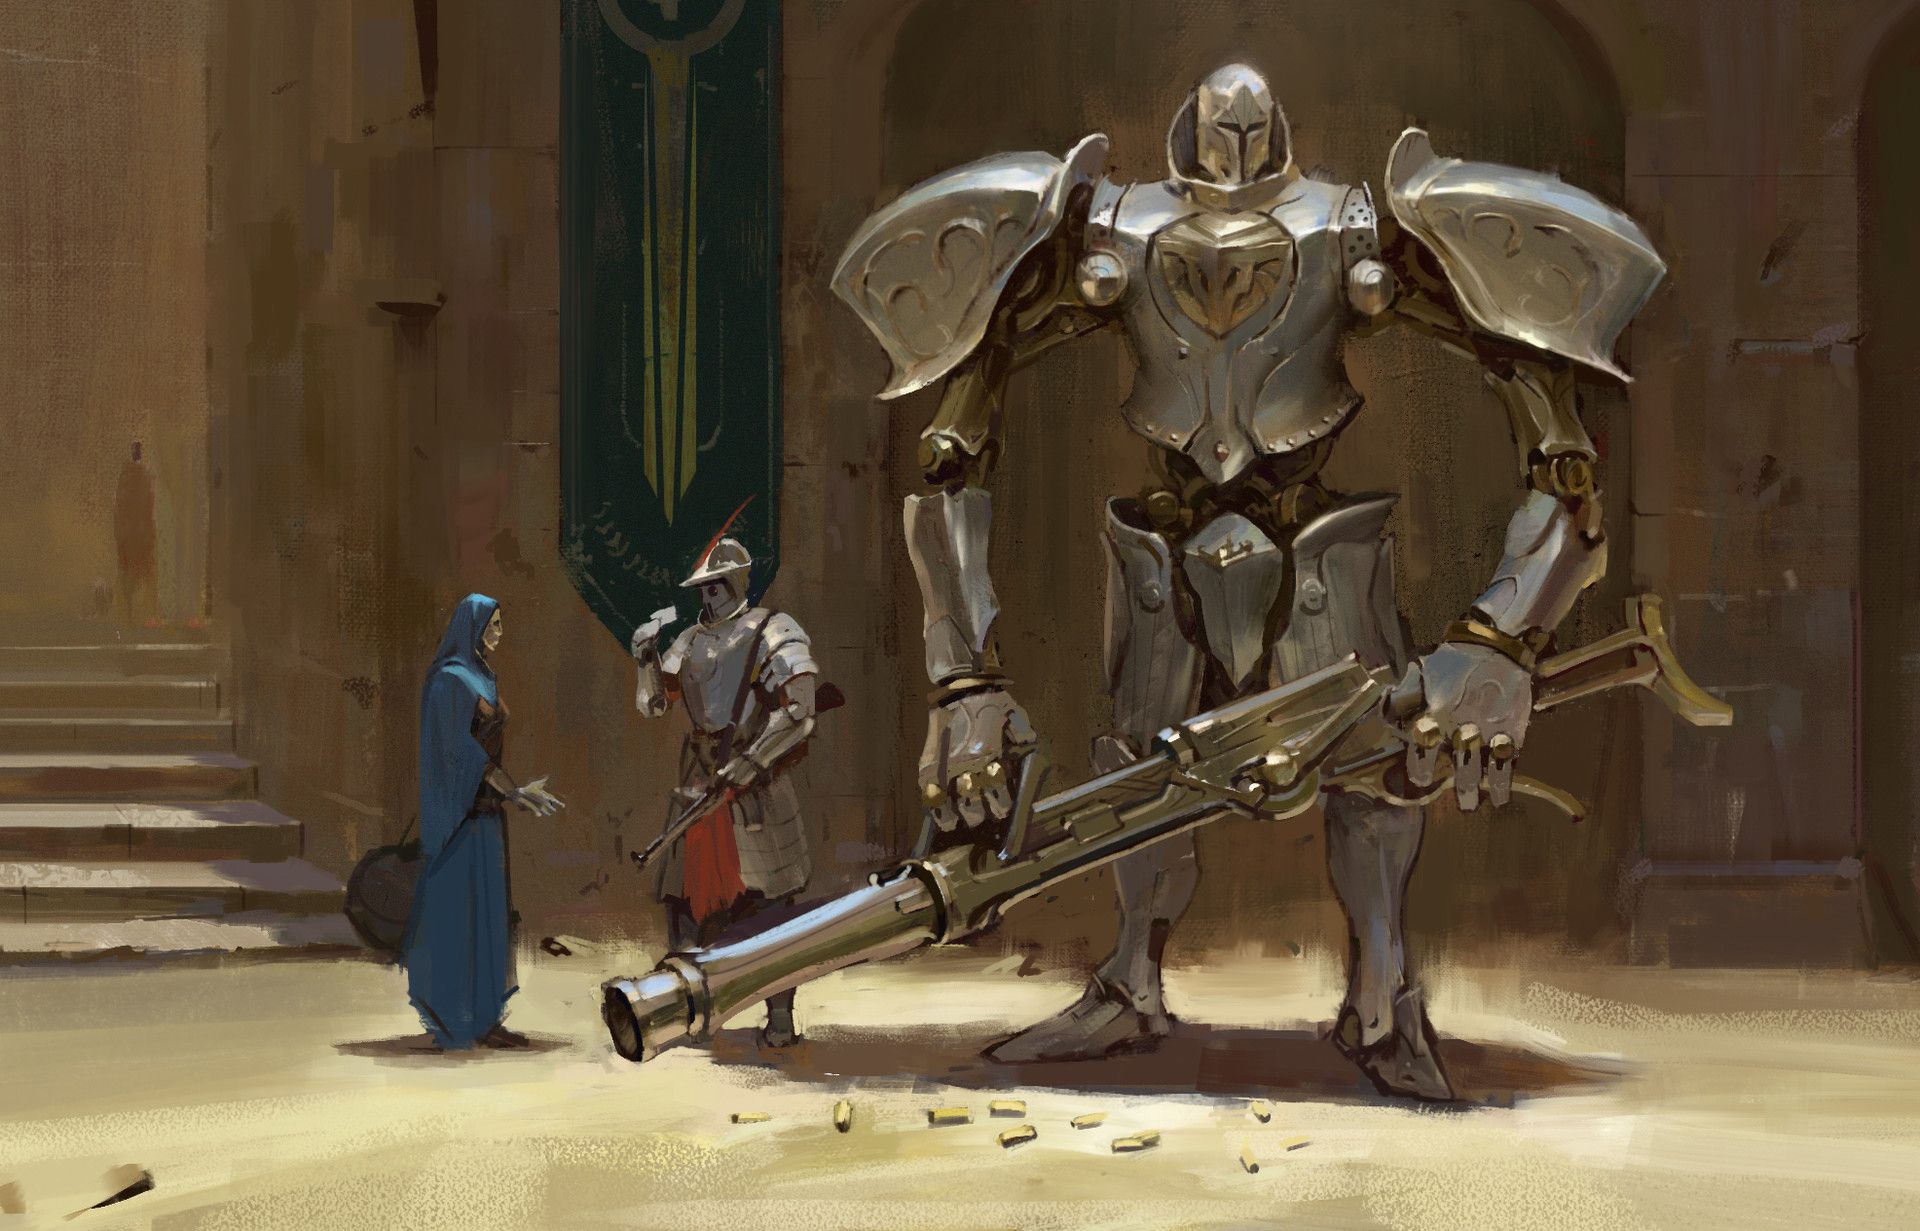 General 1920x1231 robot soldier women rifles armor weapon artwork fantasy art futuristic illustration digital art